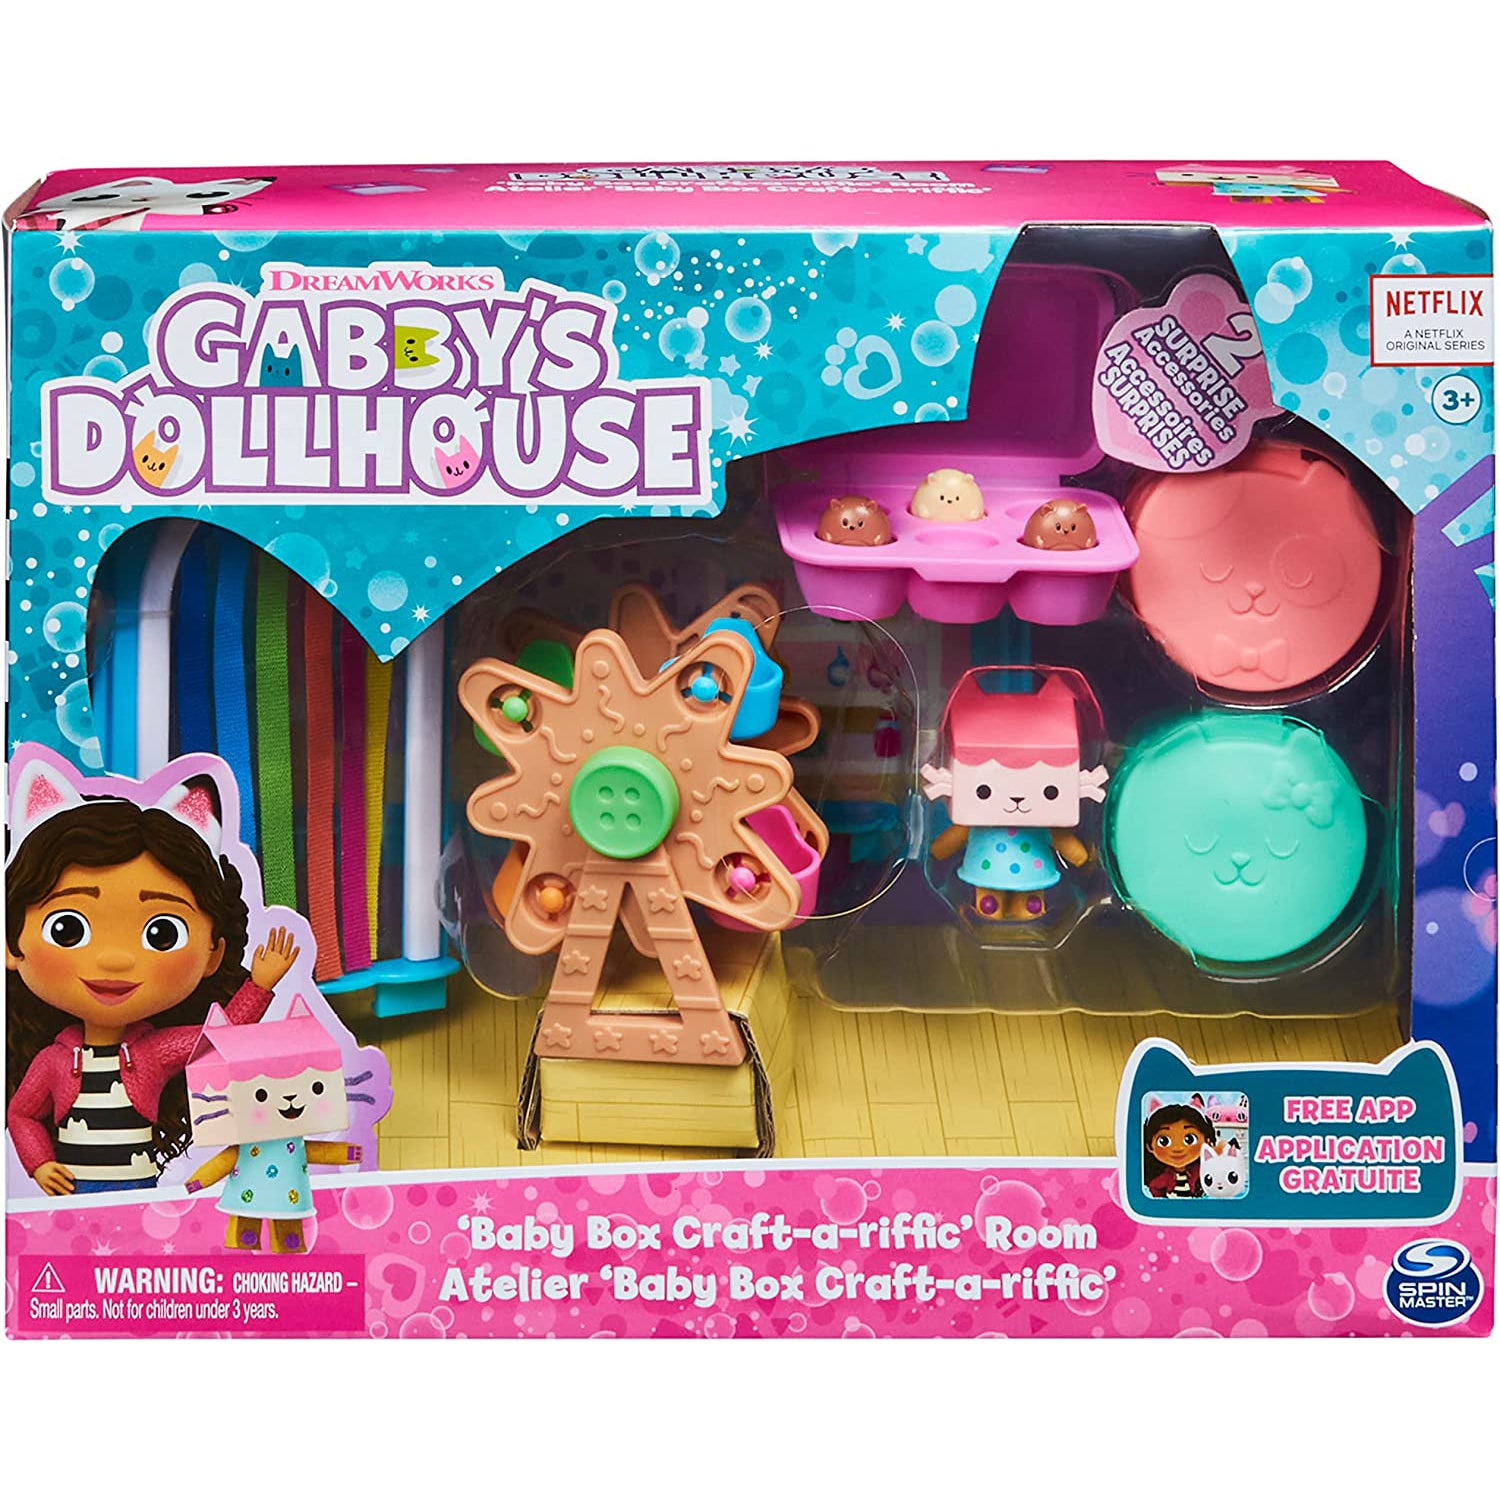 Gabby's Dollhouse - Baby Box Craft-a-Riffic Room